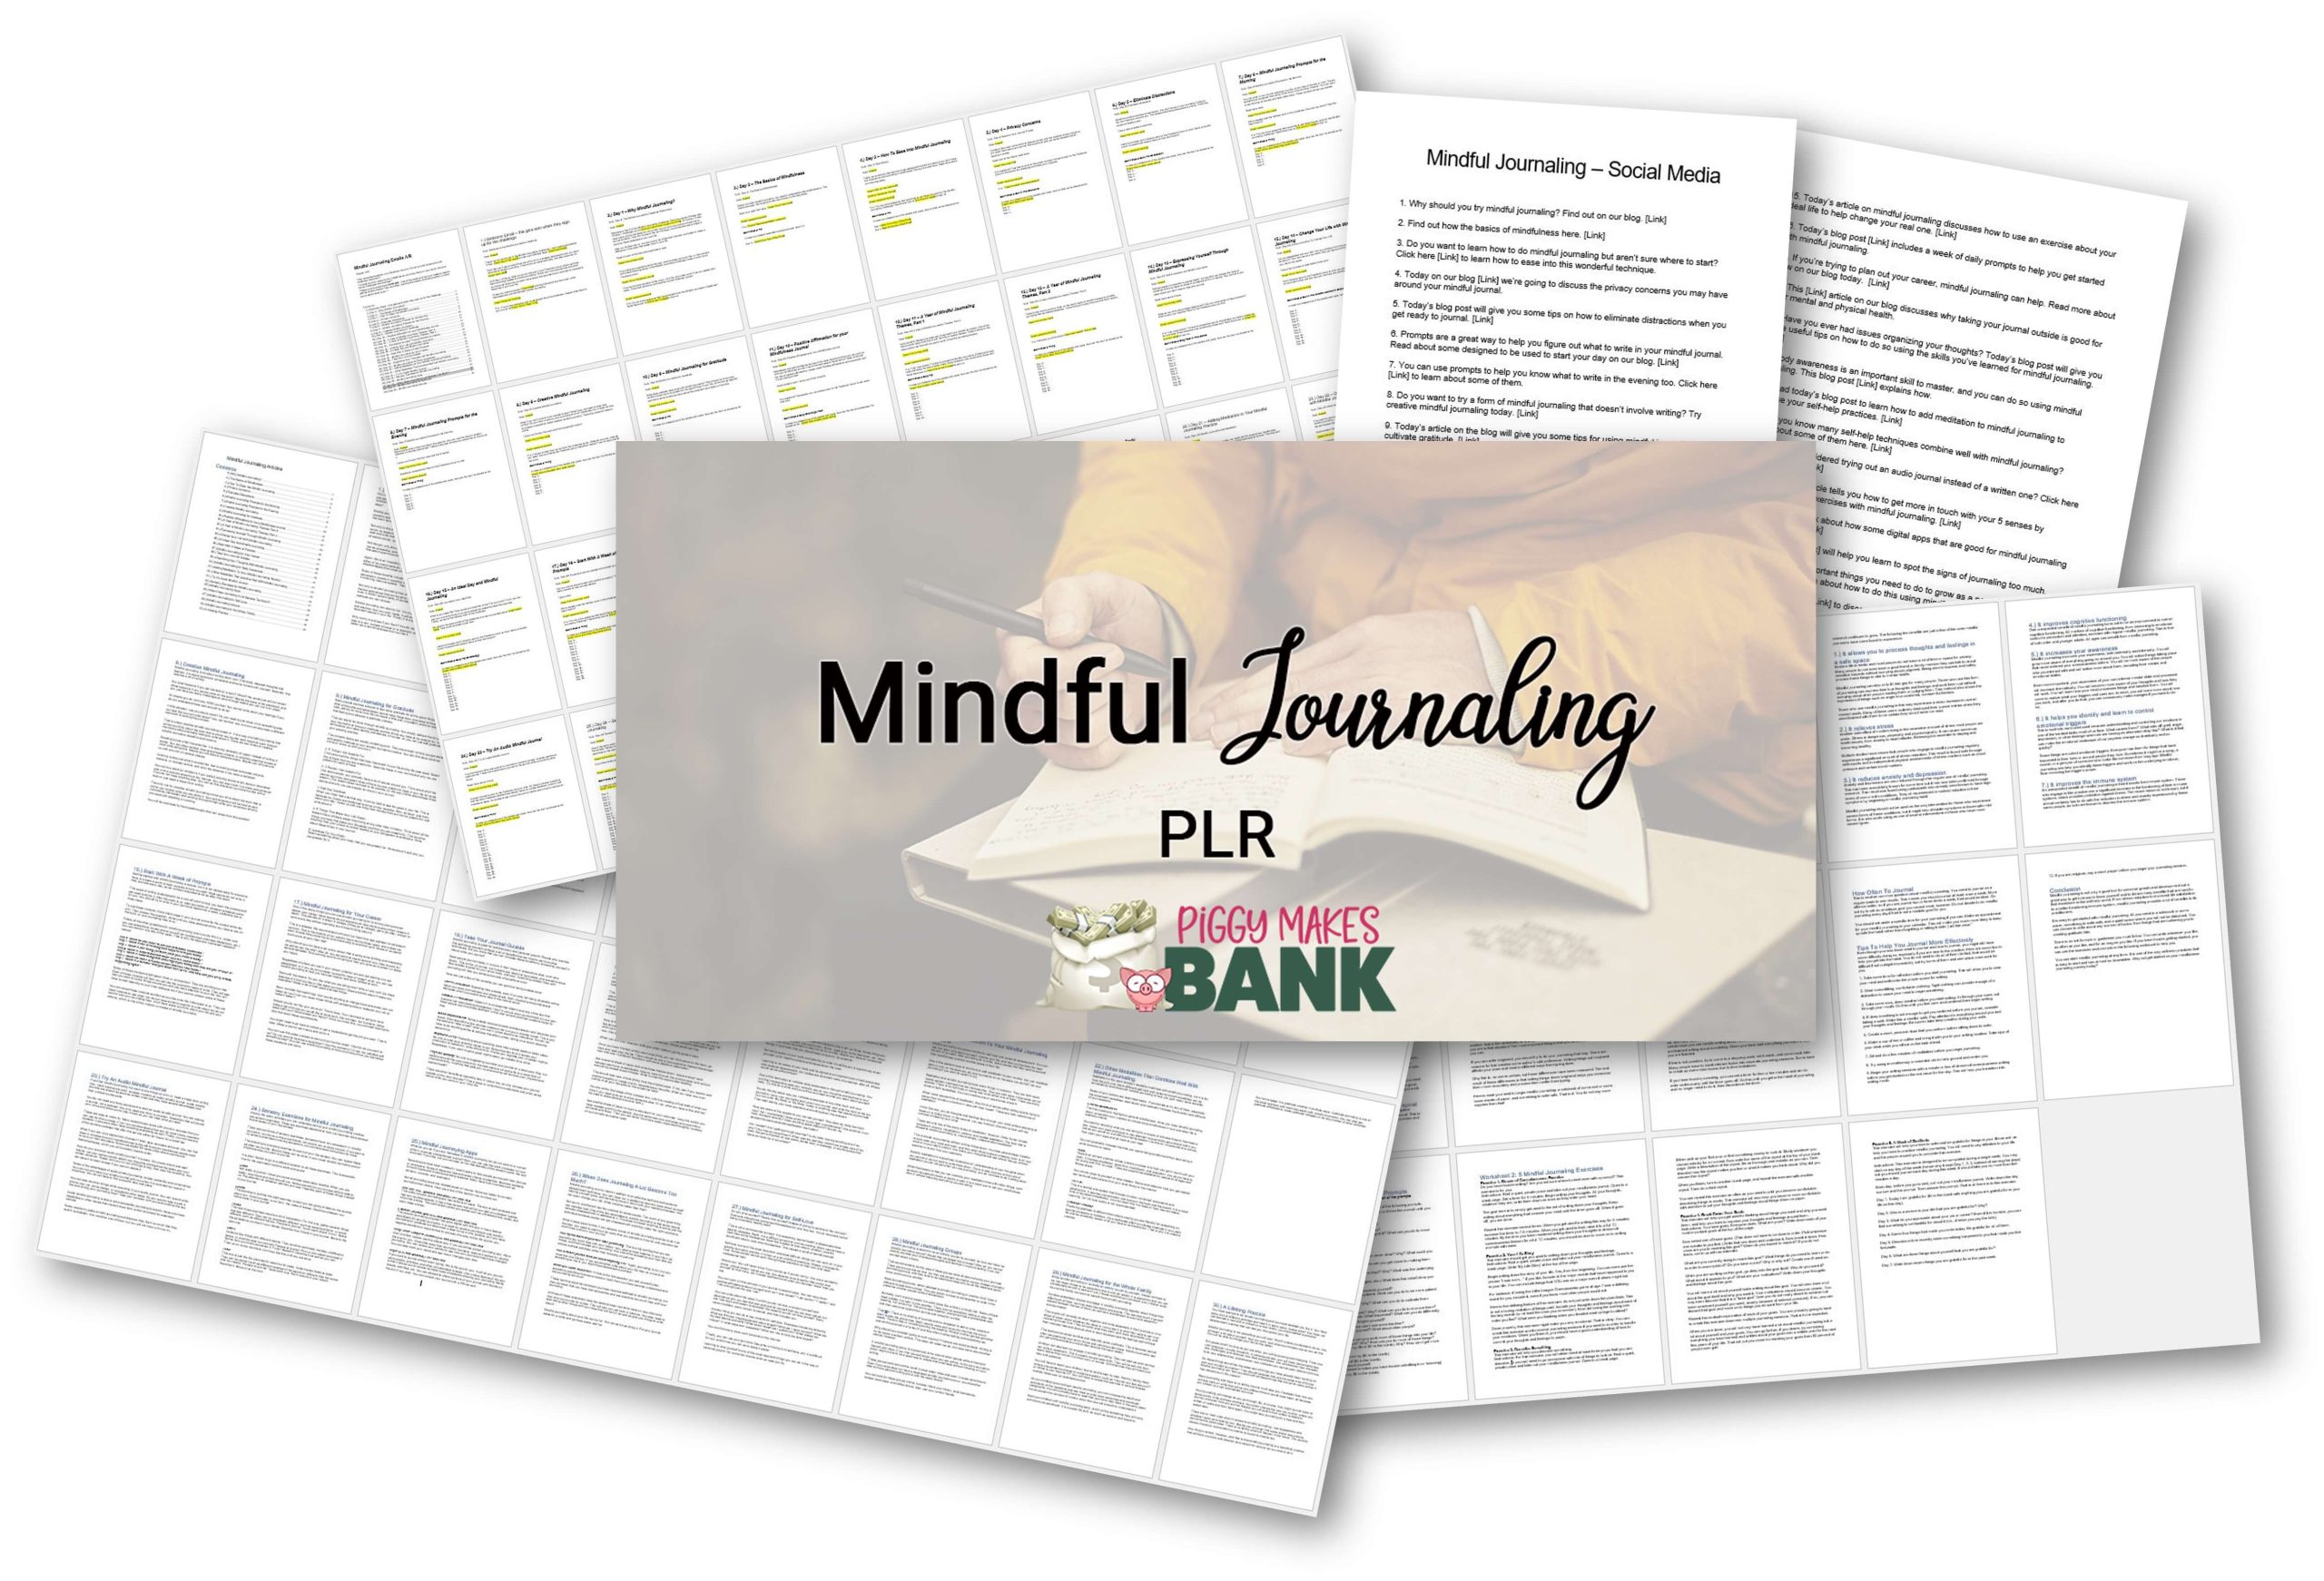 Mindful Journaling PLR